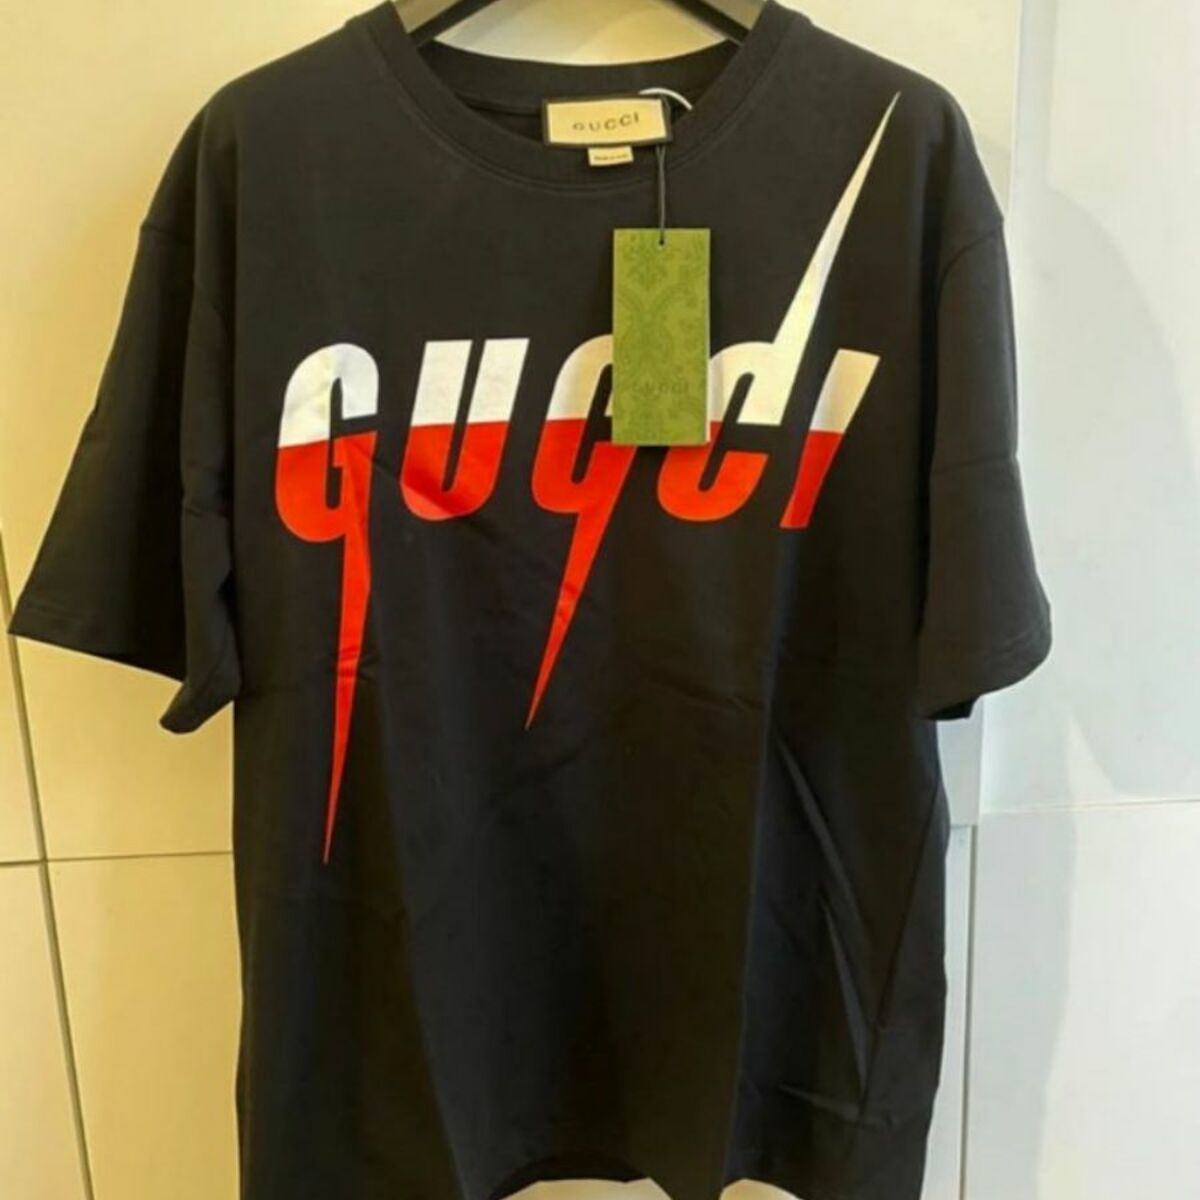 Vêtements Homme T-shirts Rossetto courtes Camera Gucci Maglia T-shirt Camera Gucci Noir